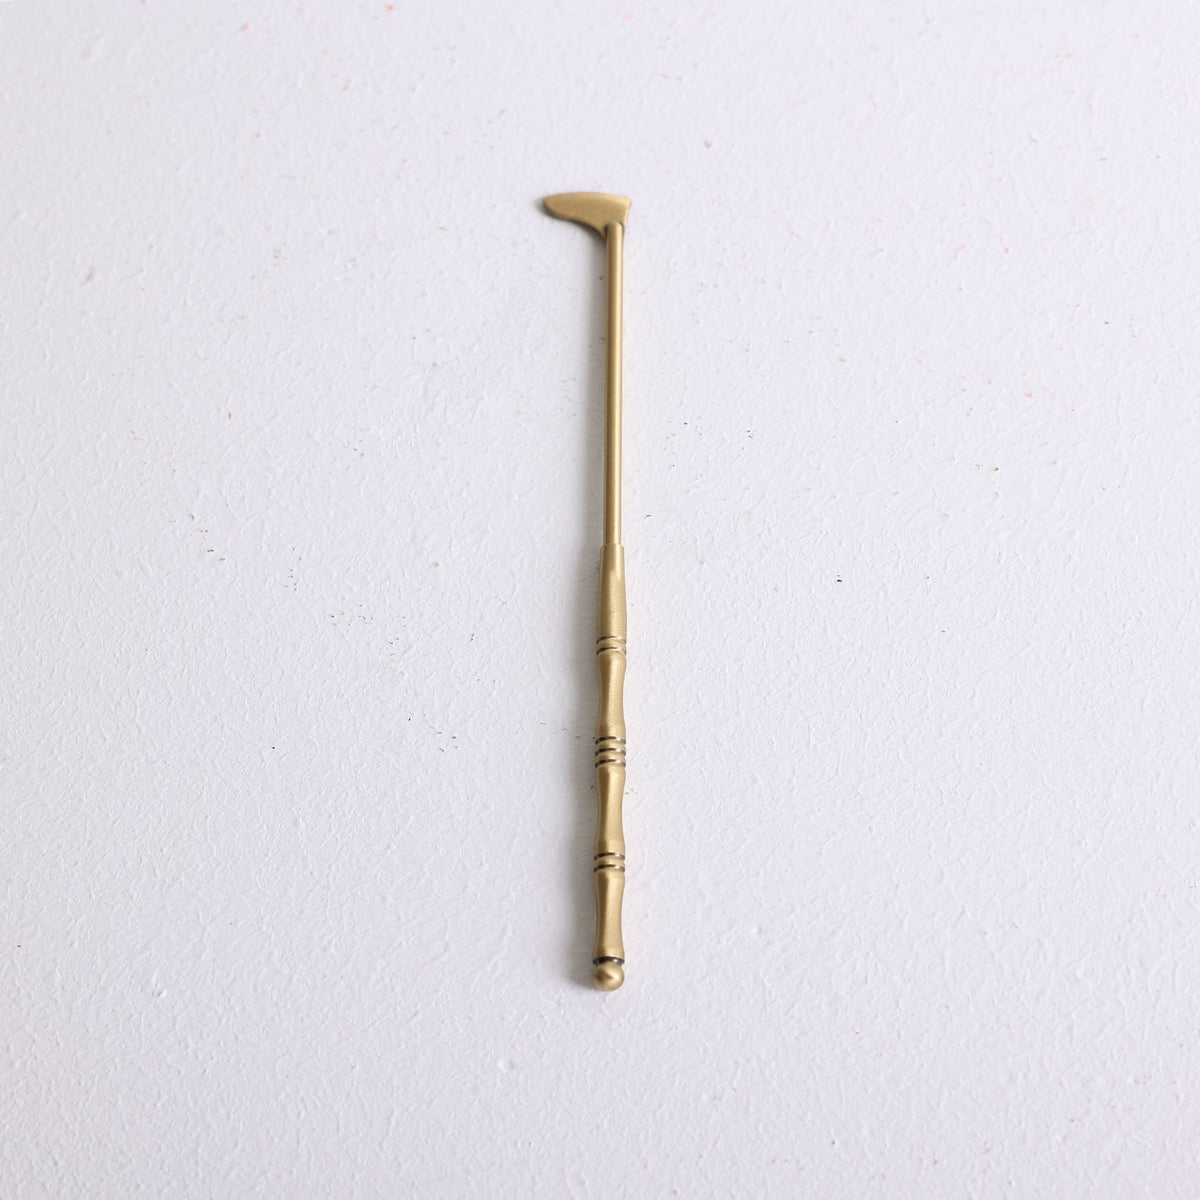 A small bronze spatula for distributing powder incense in a mold